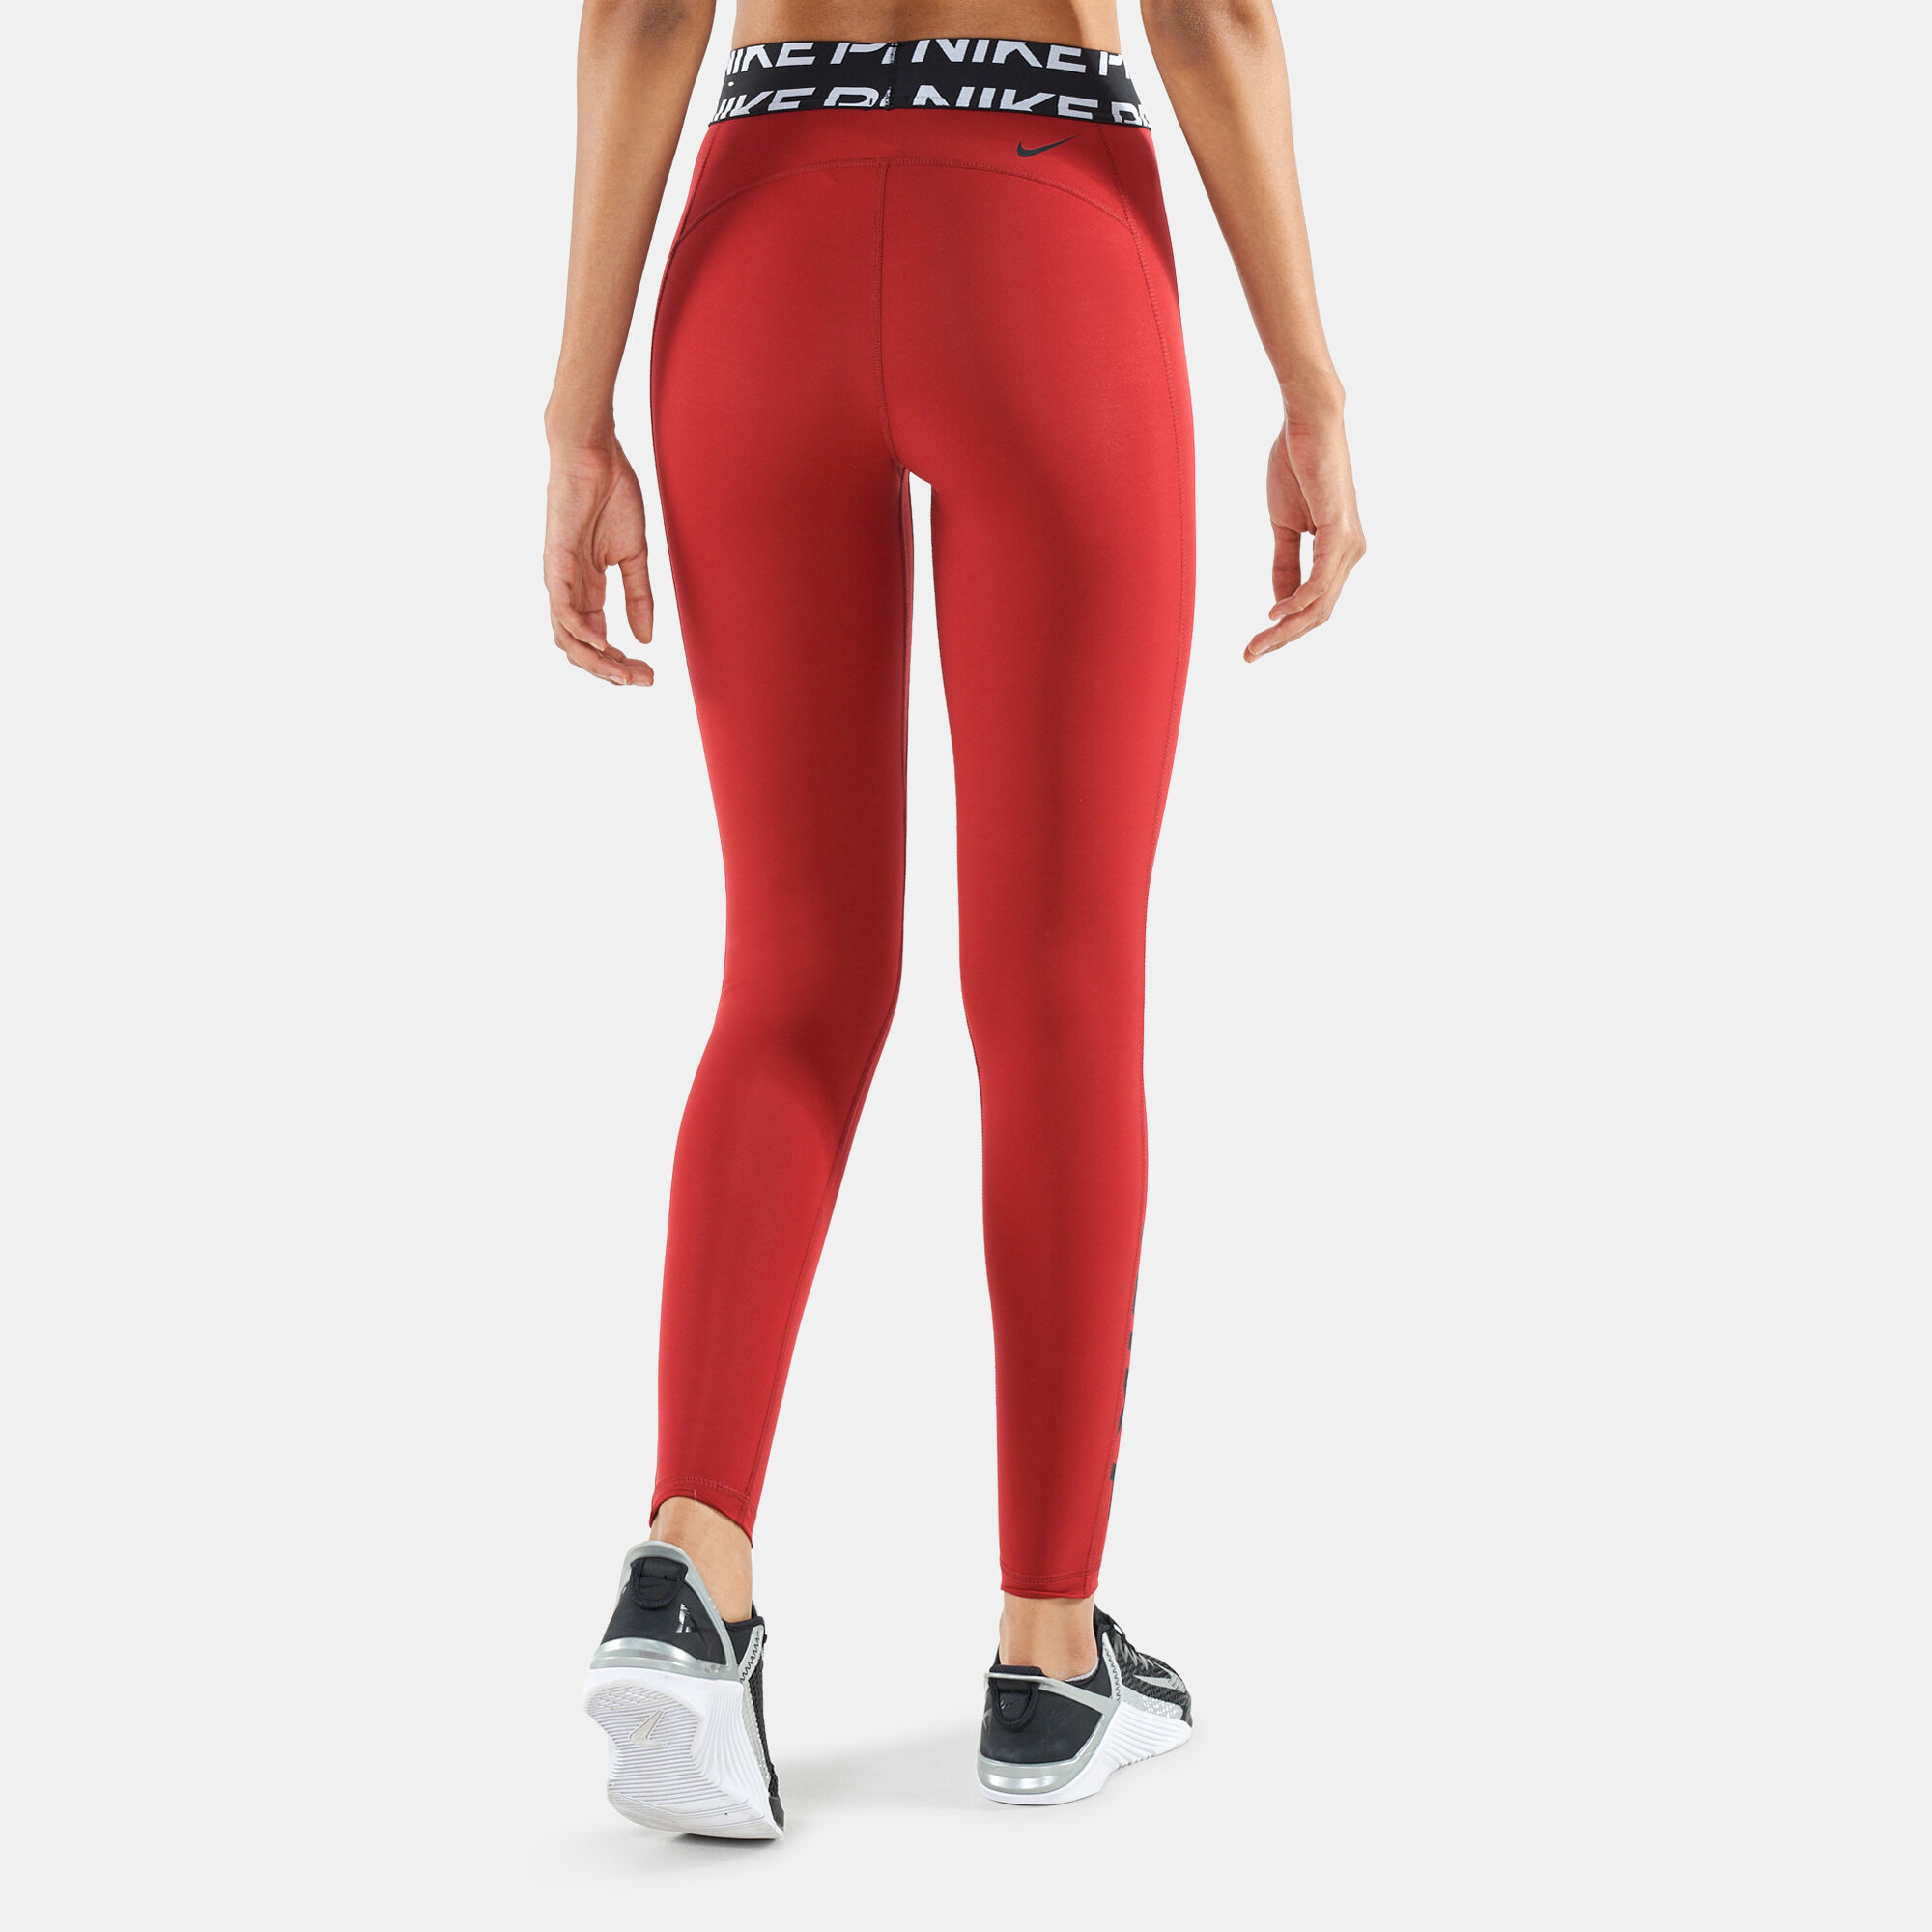 Discover 129+ red nike leggings best